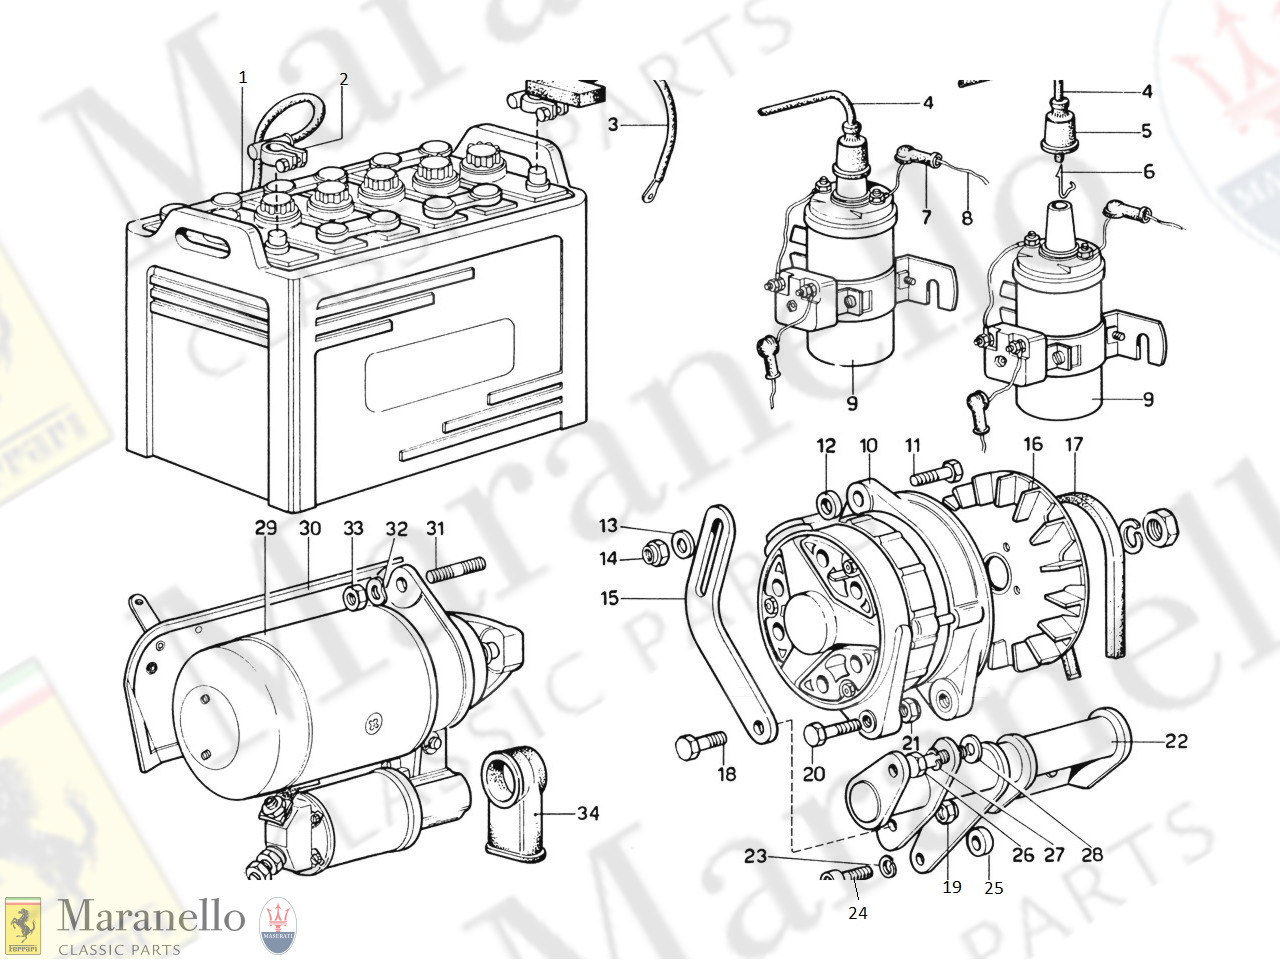 035 - Generator, Accumulator Coils & Starter